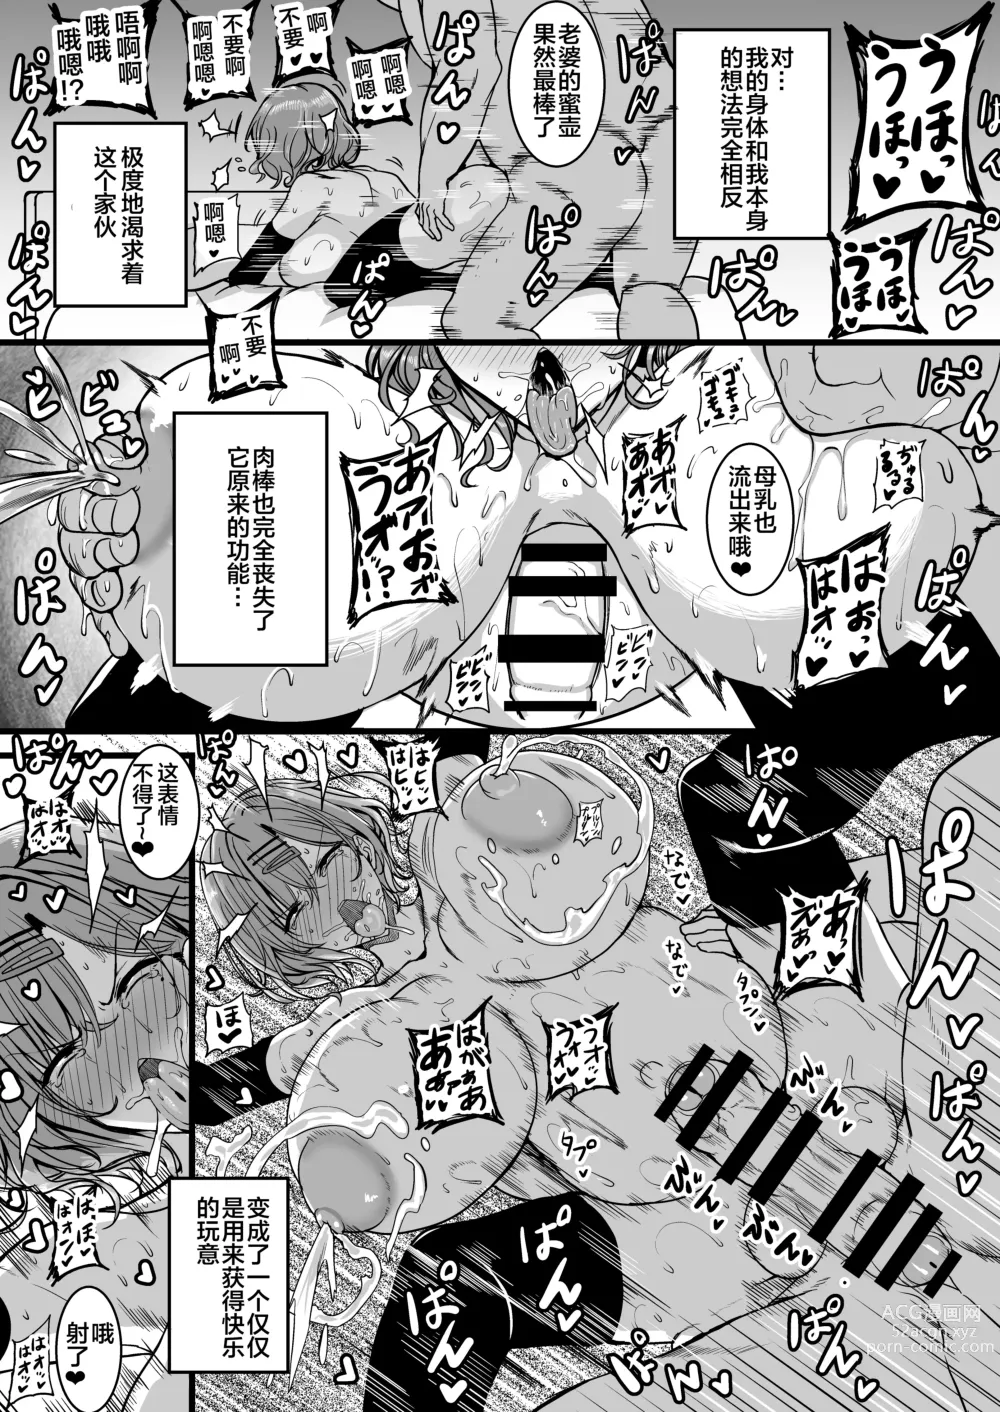 Page 6 of doujinshi HTSK16